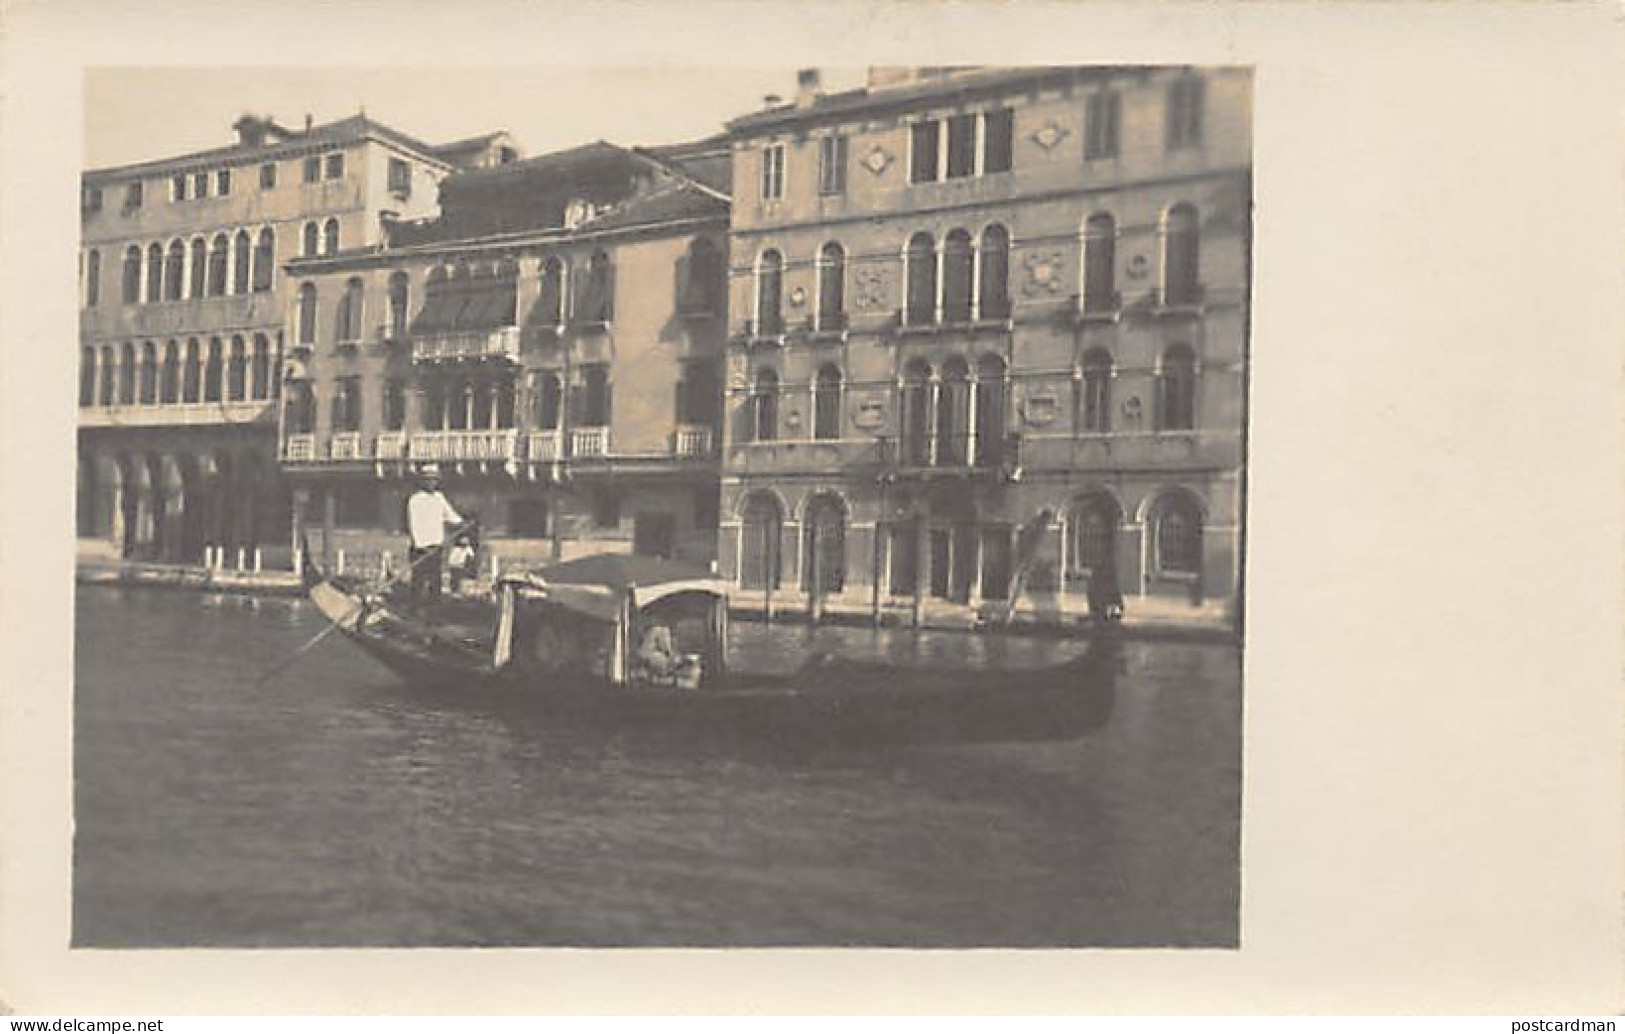 Italia - VENEZIA - Gondola Sul Canal Grande - CARTOLINE FOTO - Venezia